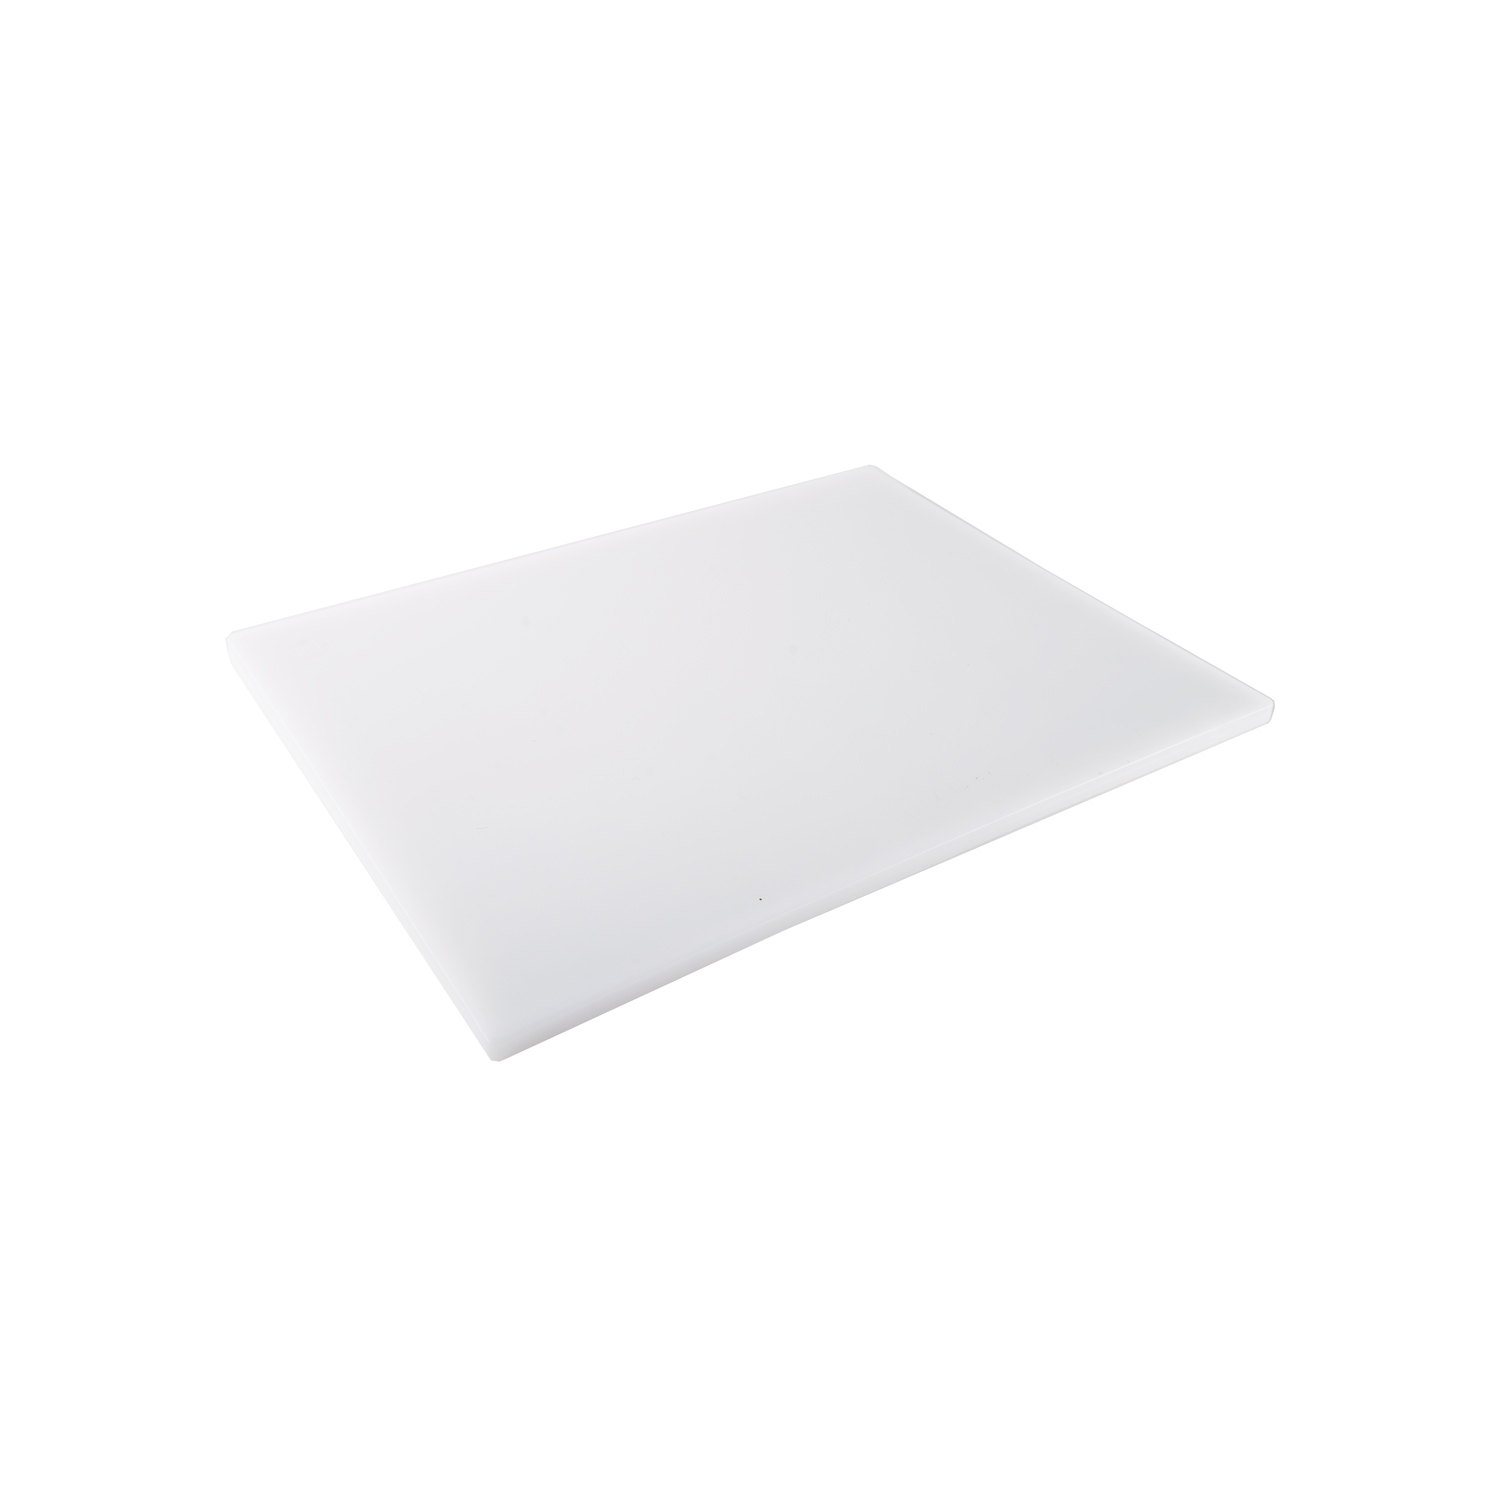 CAC China CBPH-1824W Reversible White Cutting Board, 24" x 18" 